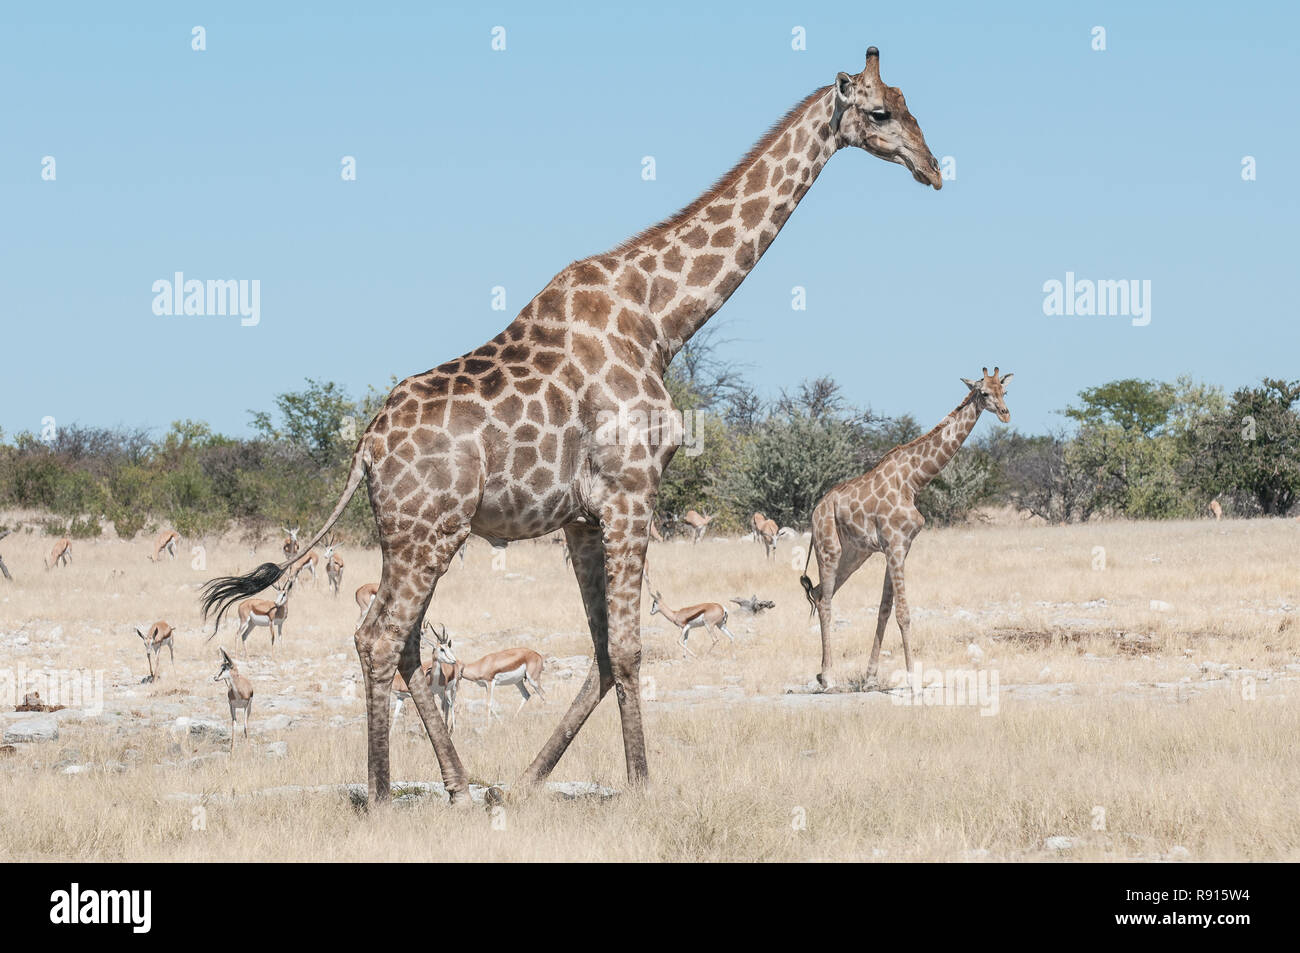 Giraffes in landscape Stock Photo